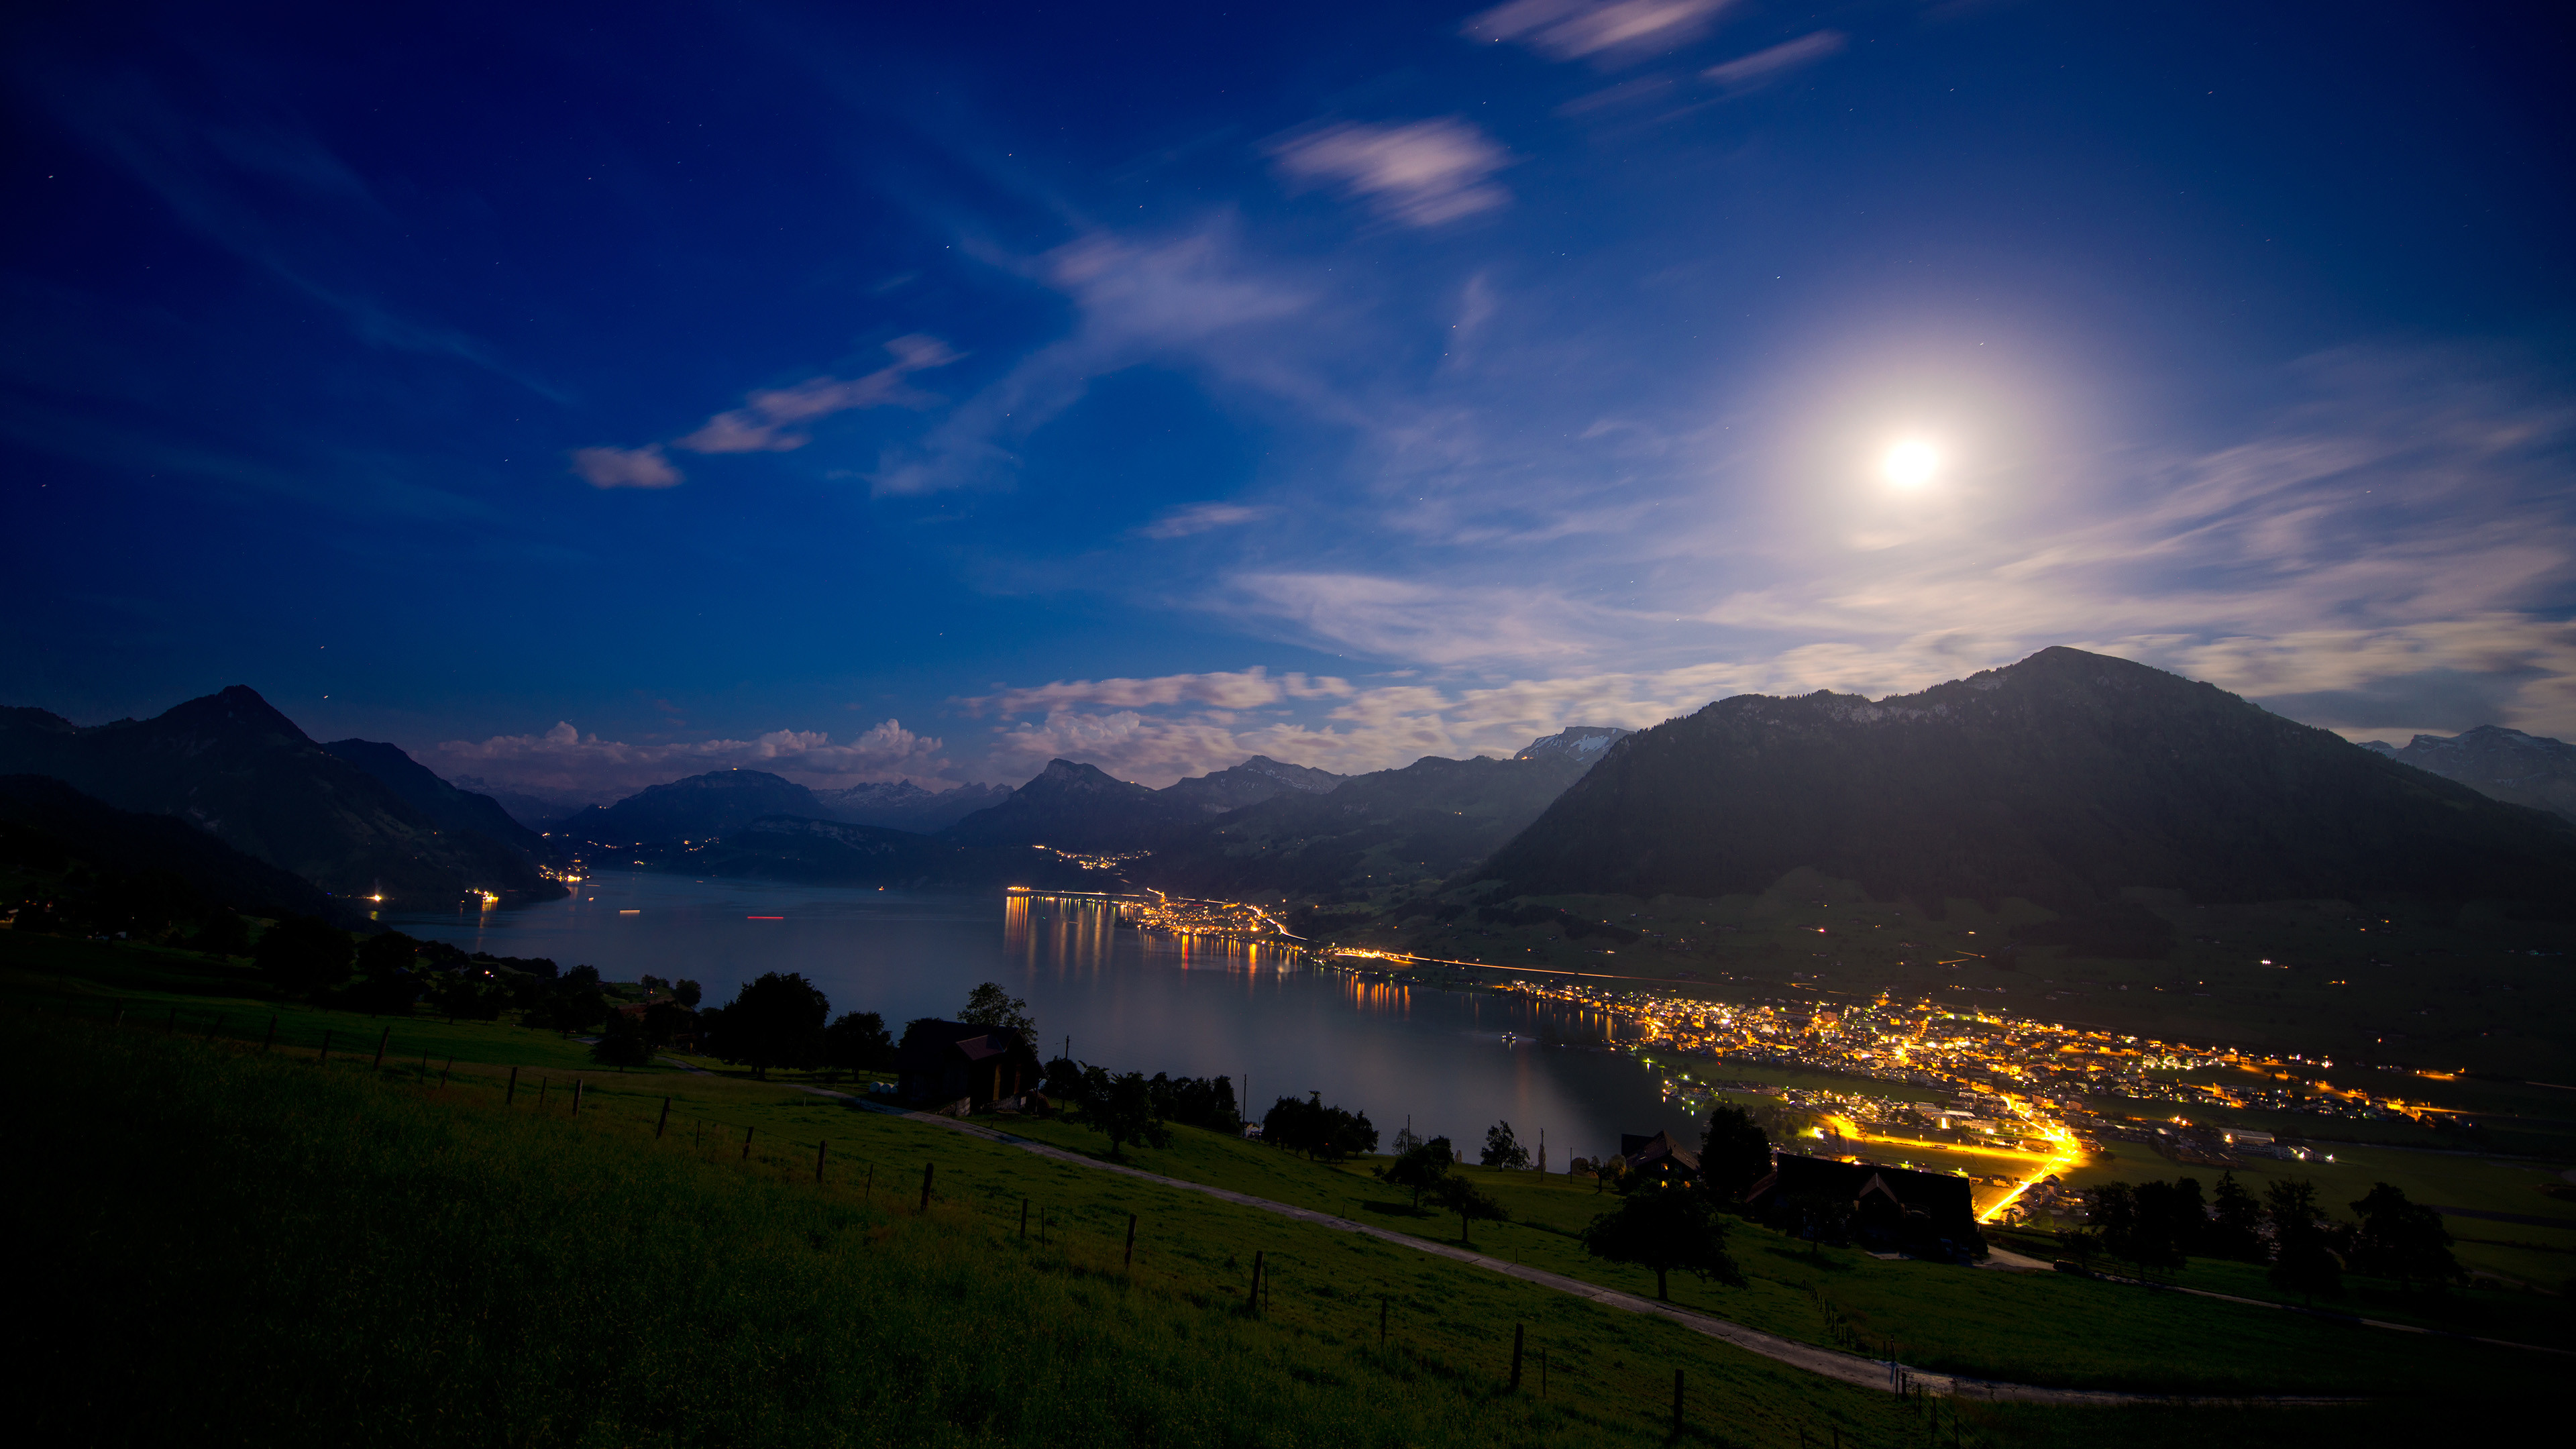 3840x2160 Moonlit night in the Swiss Alps []